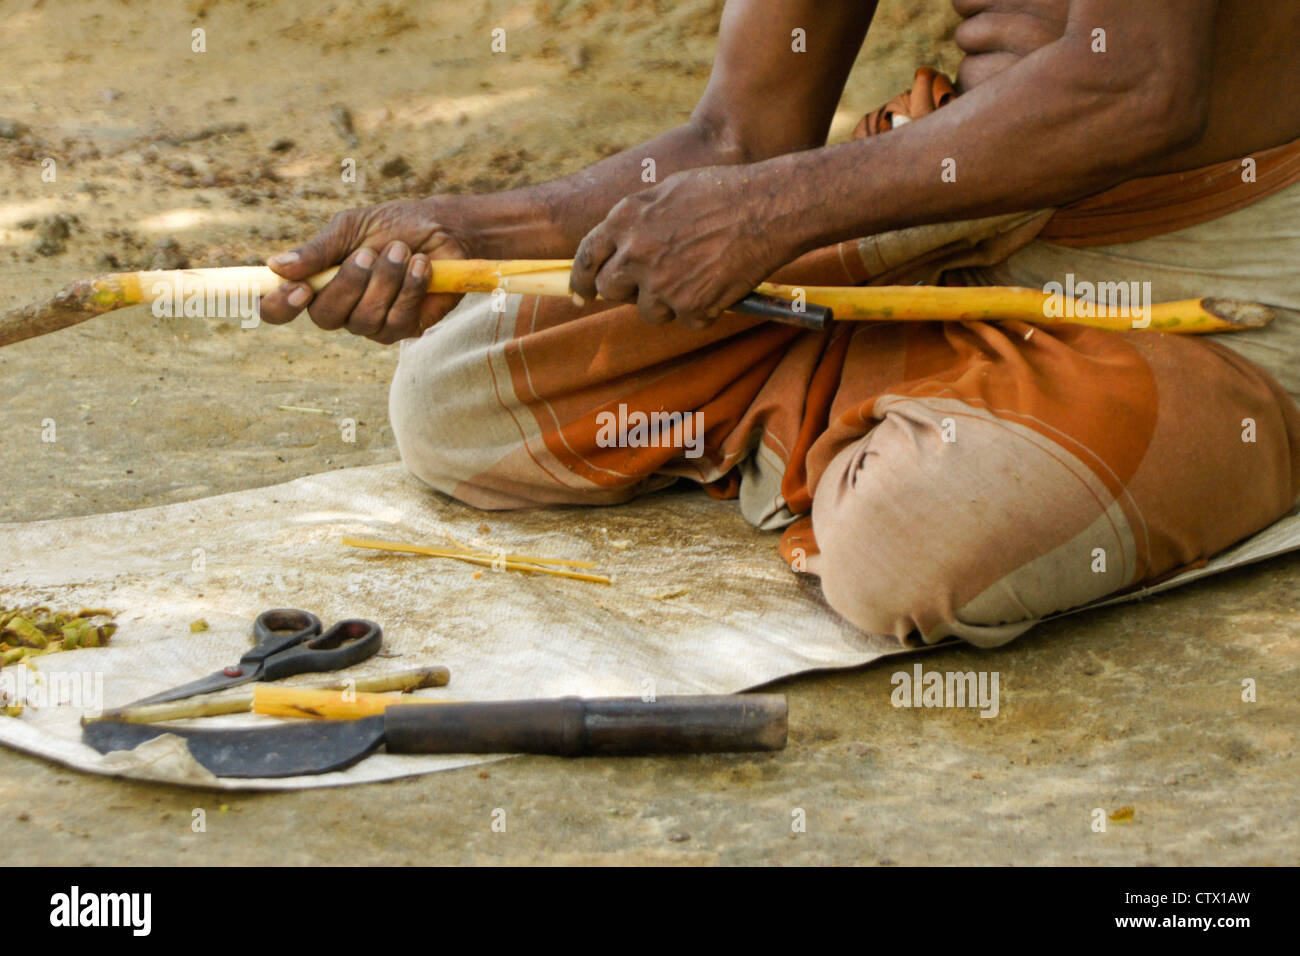 Man peeling cinnamon bark from branch, Sri Lanka Stock Photo